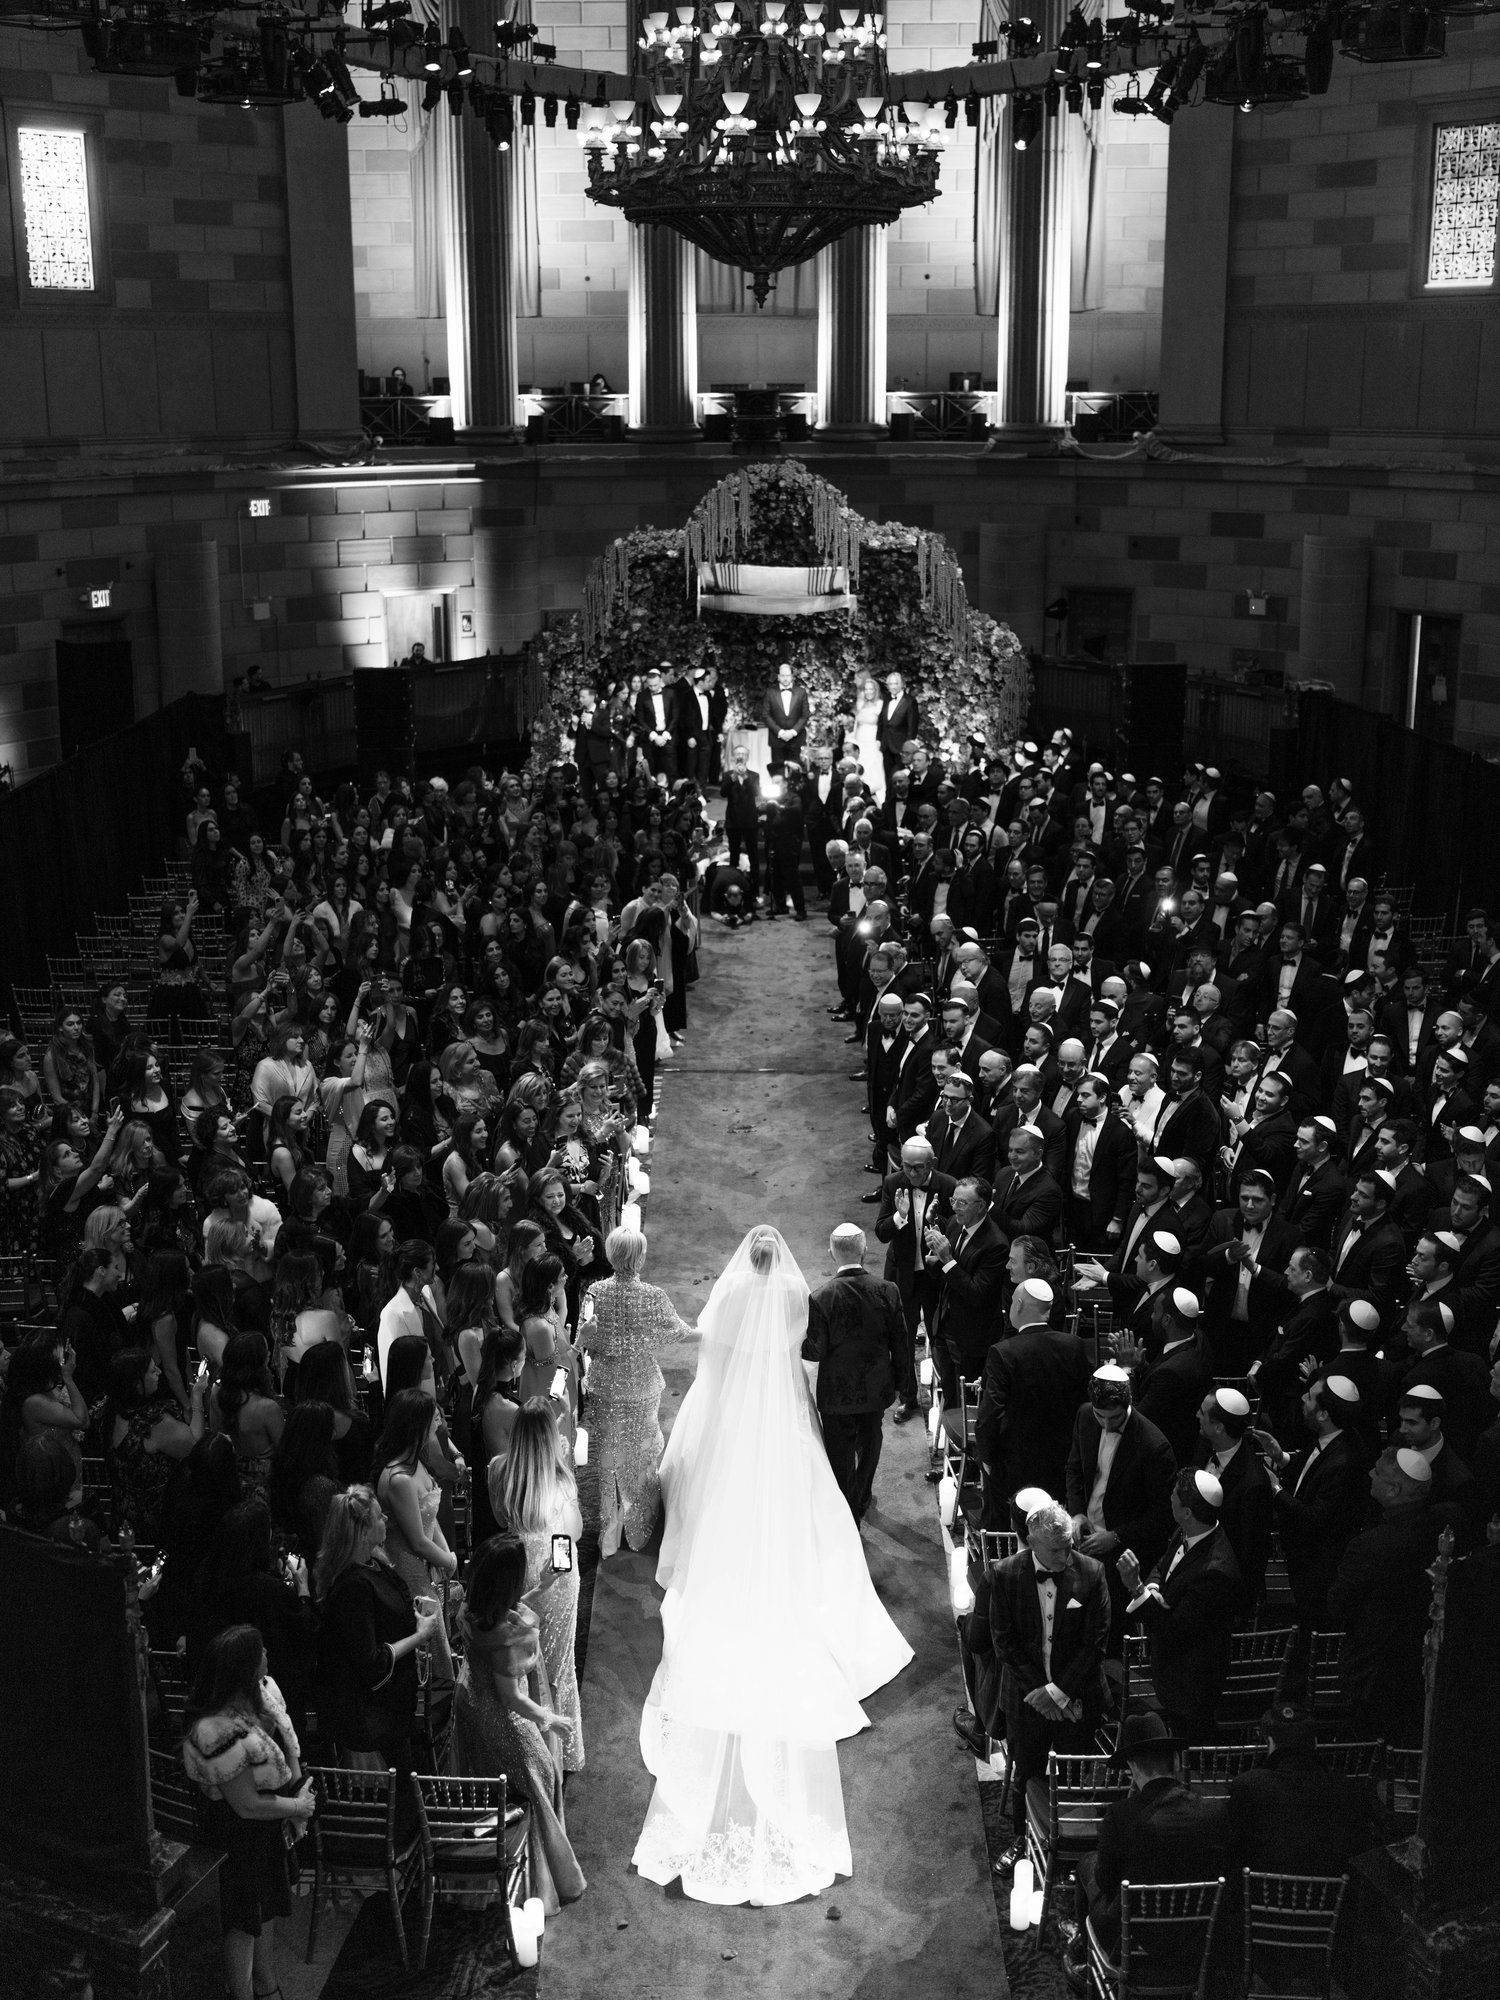 Gotham Hall Stunning NYC Wedding Venue in a Historic Bank